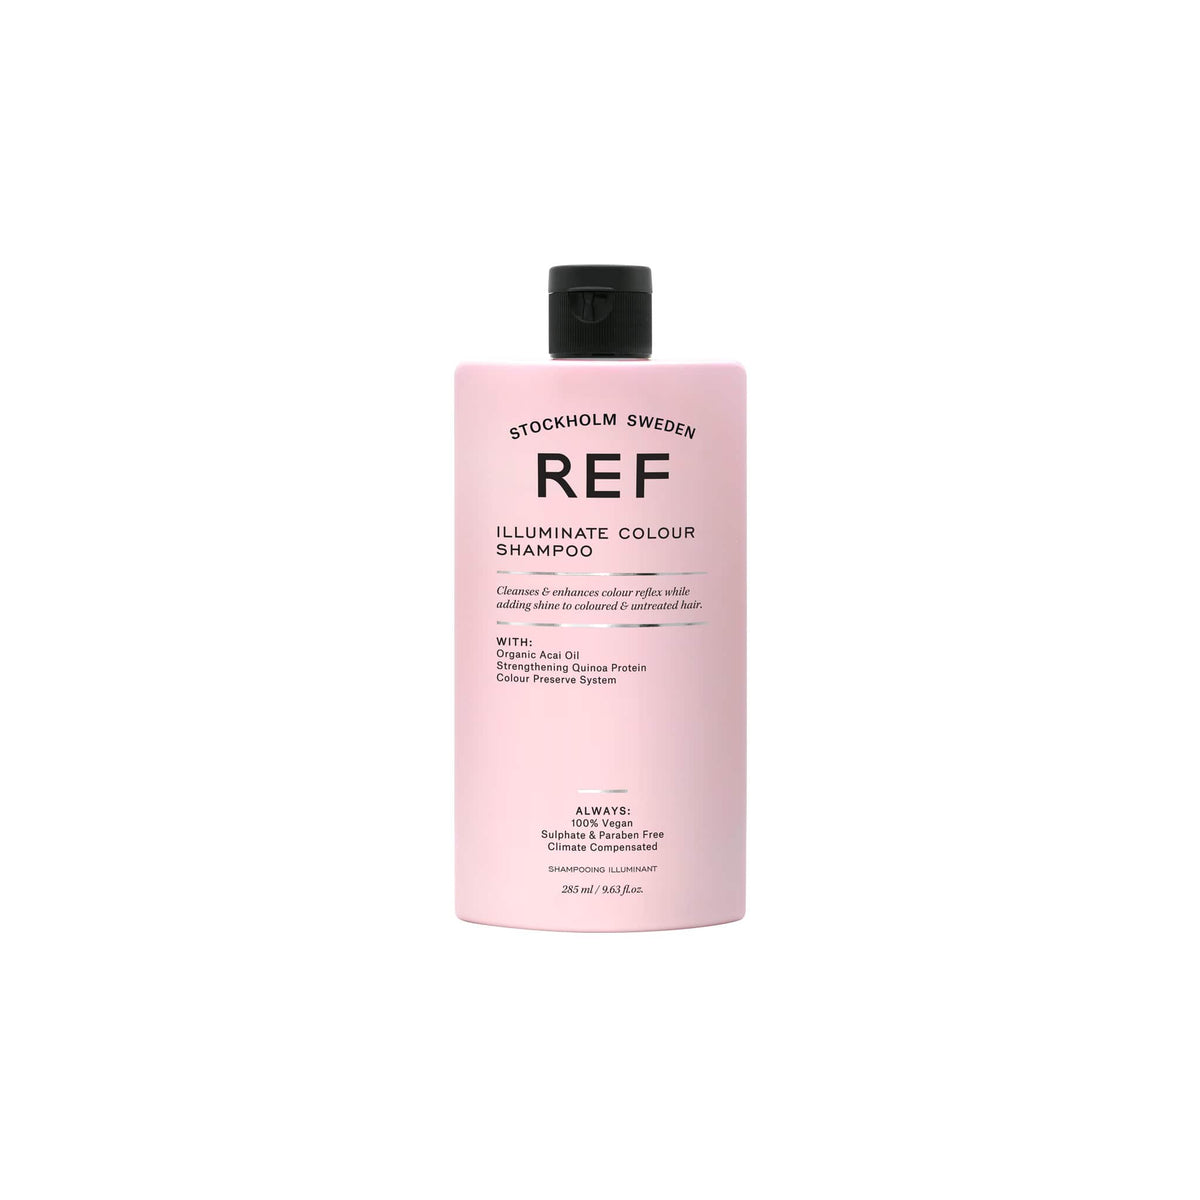 REF. Illuminate Colour Shampoo 285ml